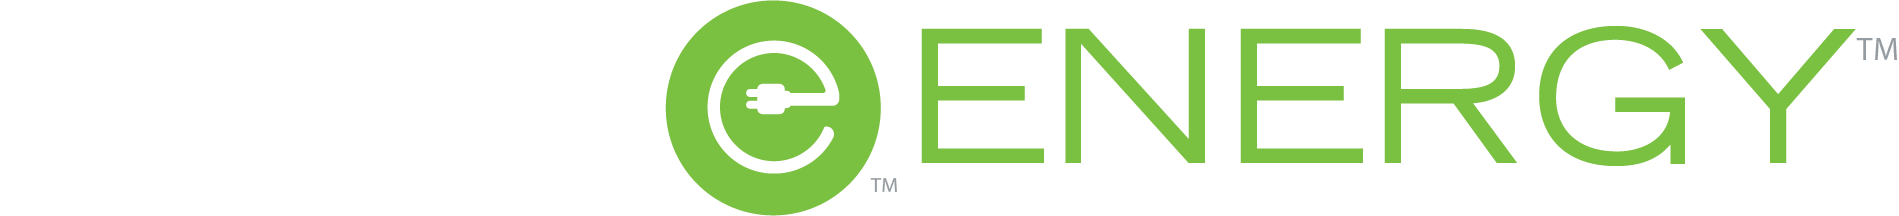 green-white-erus-energy-logo